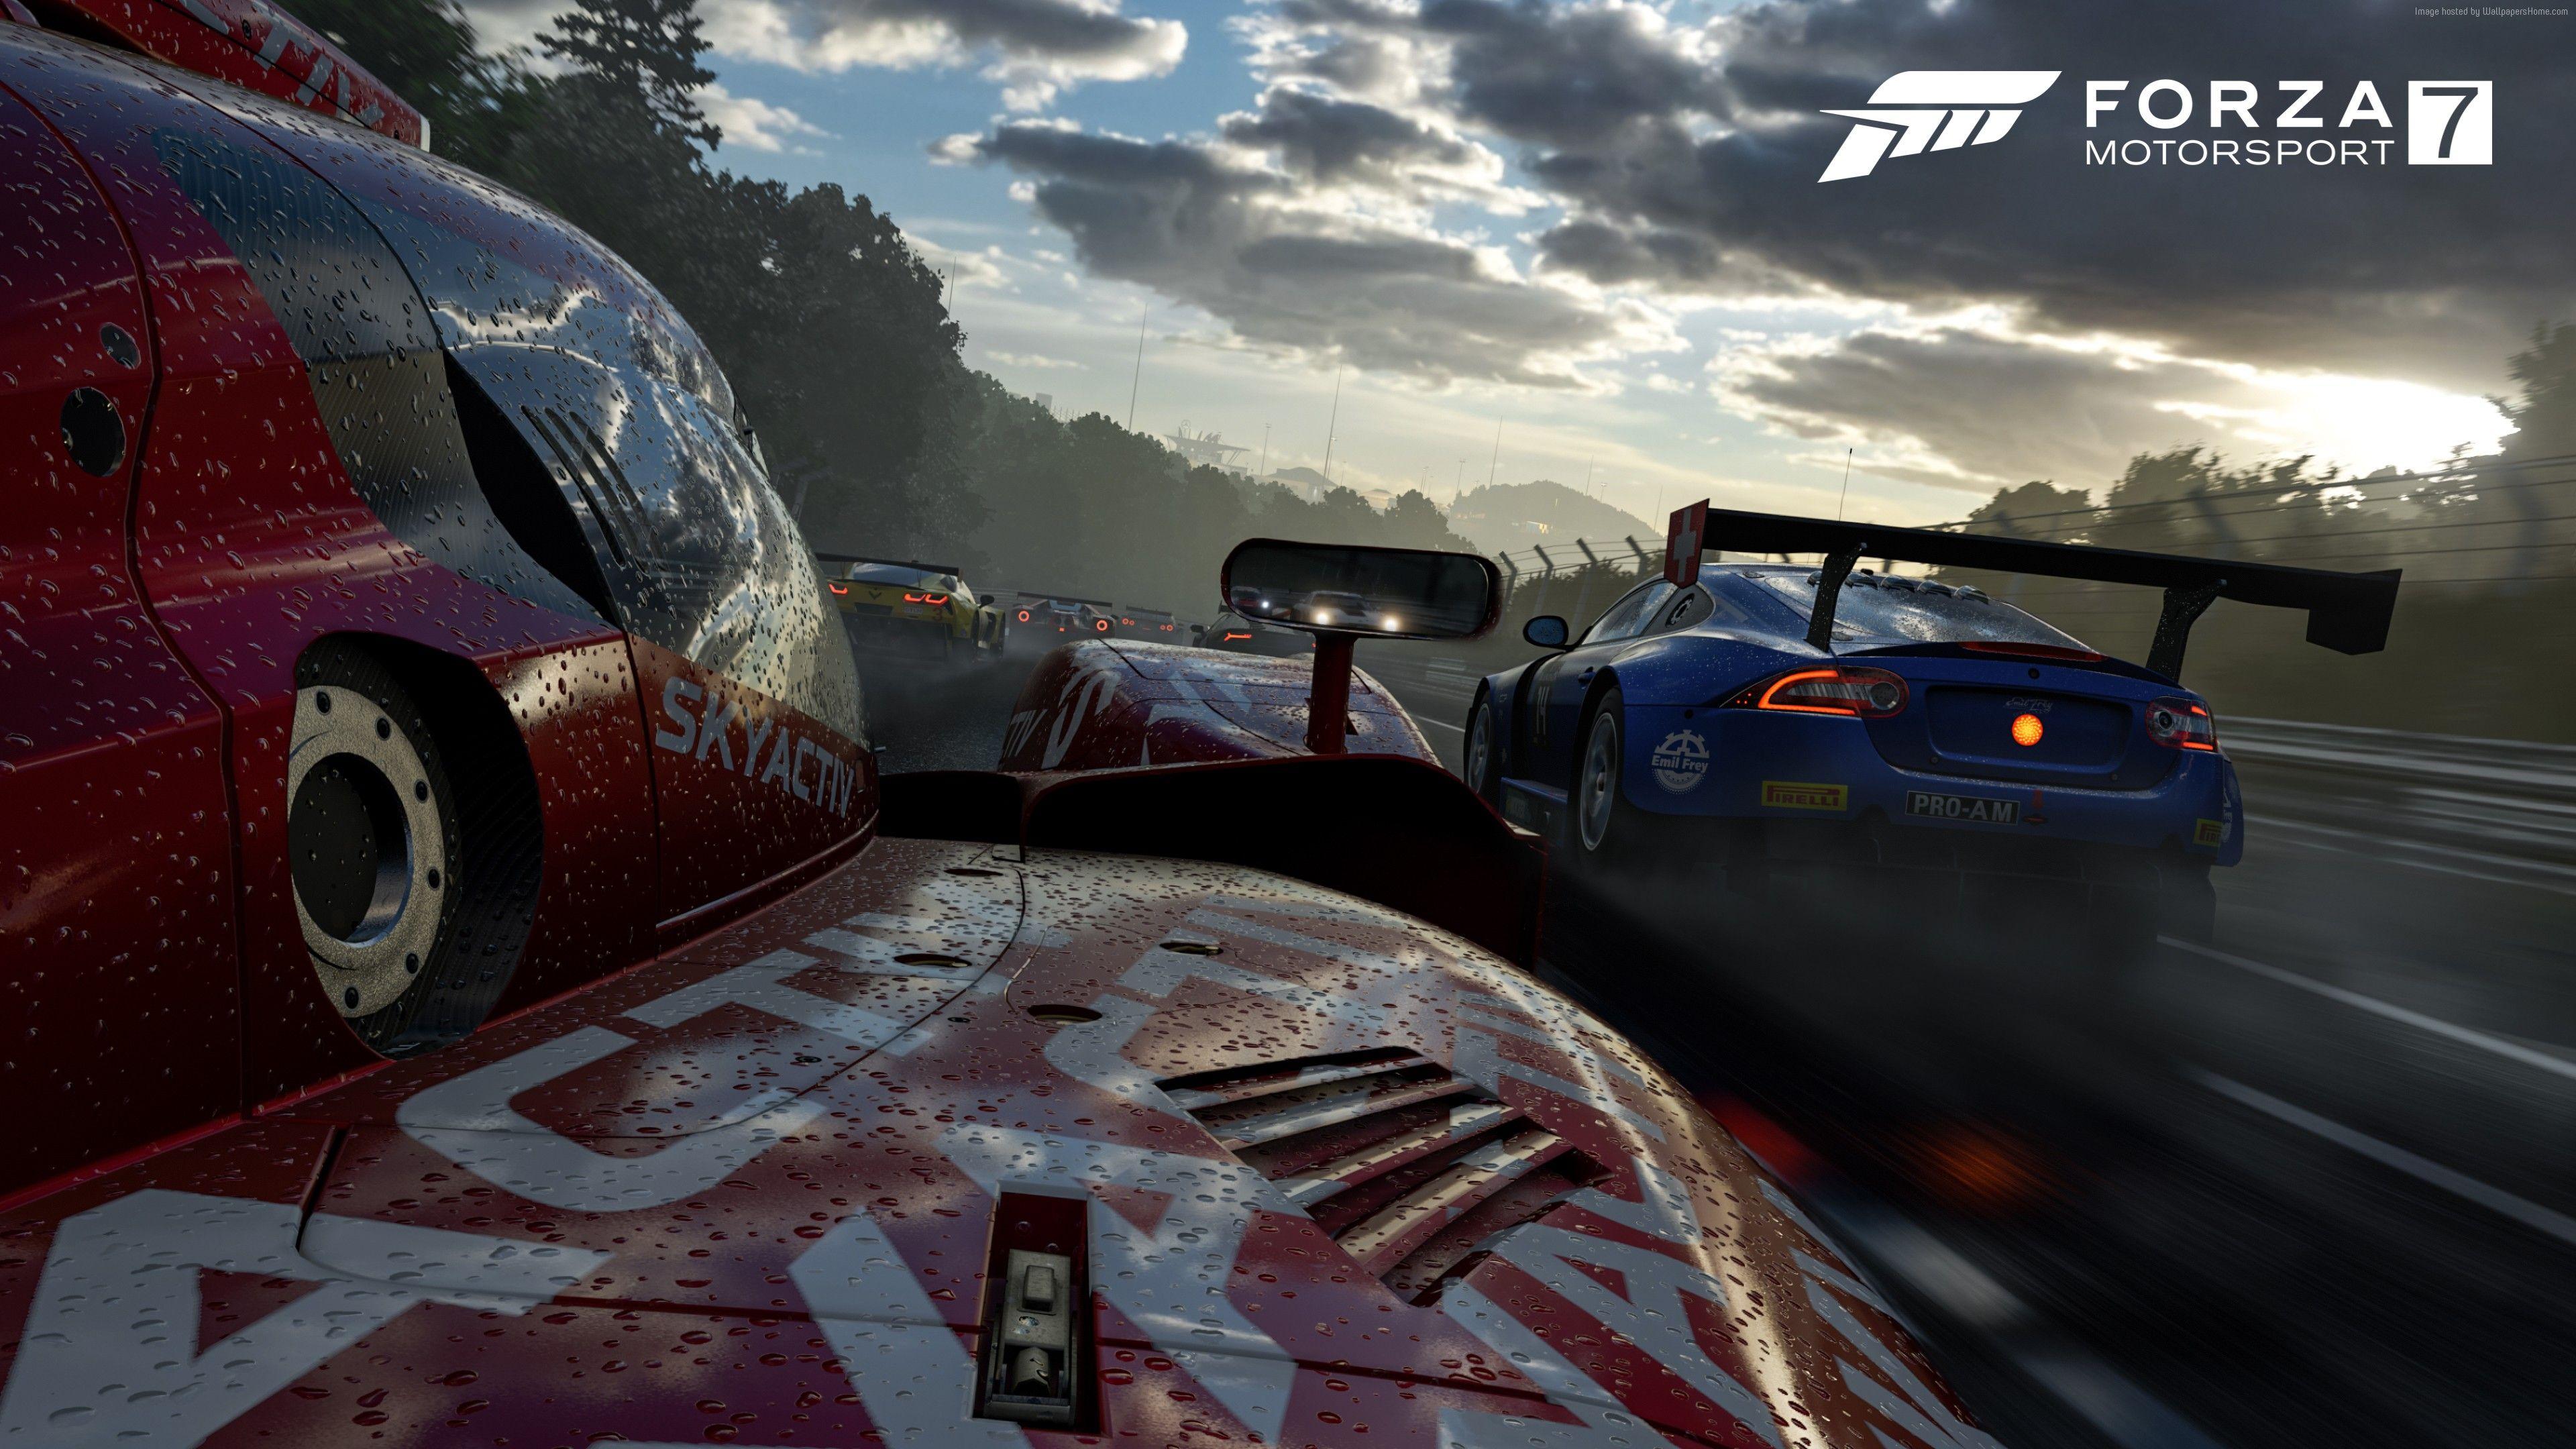 Wallpapers Forza Motorsport 7, 4k, E3 2017, screenshot, Games